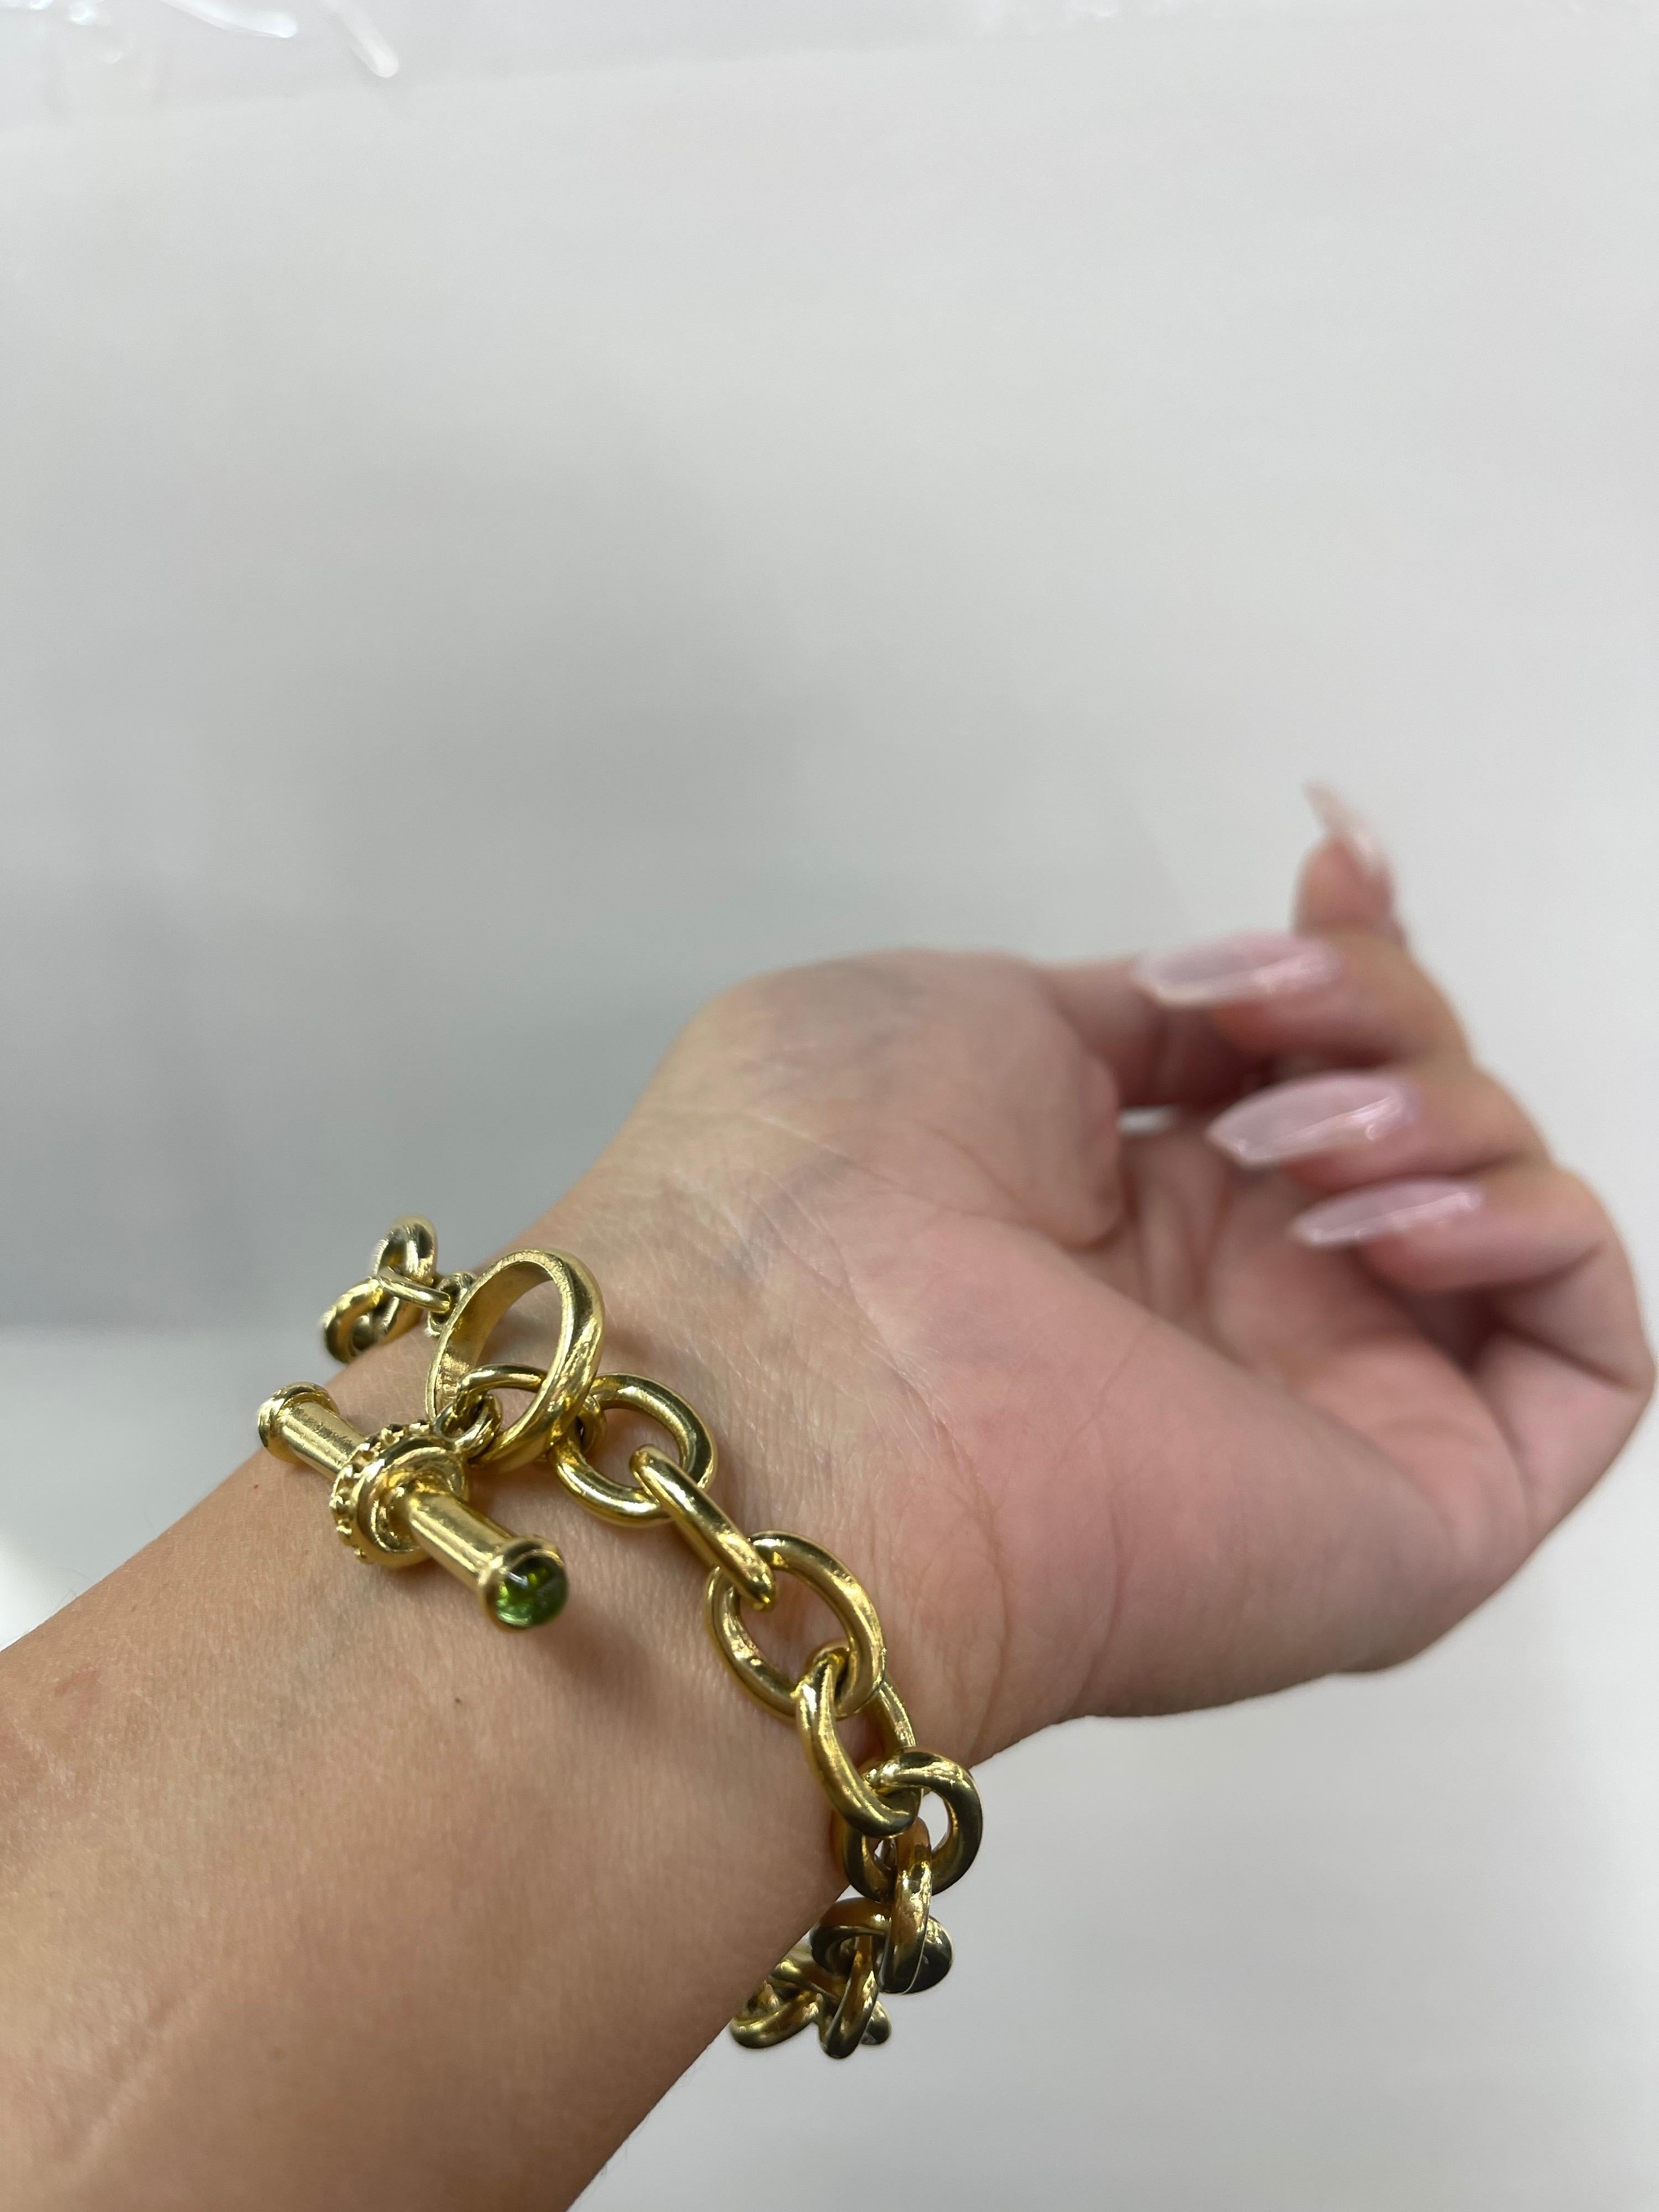 18 Karat Yellow Gold Cable Peridot Bracelet Signed Vahe Naltchayan USA 52 Grams For Sale 1